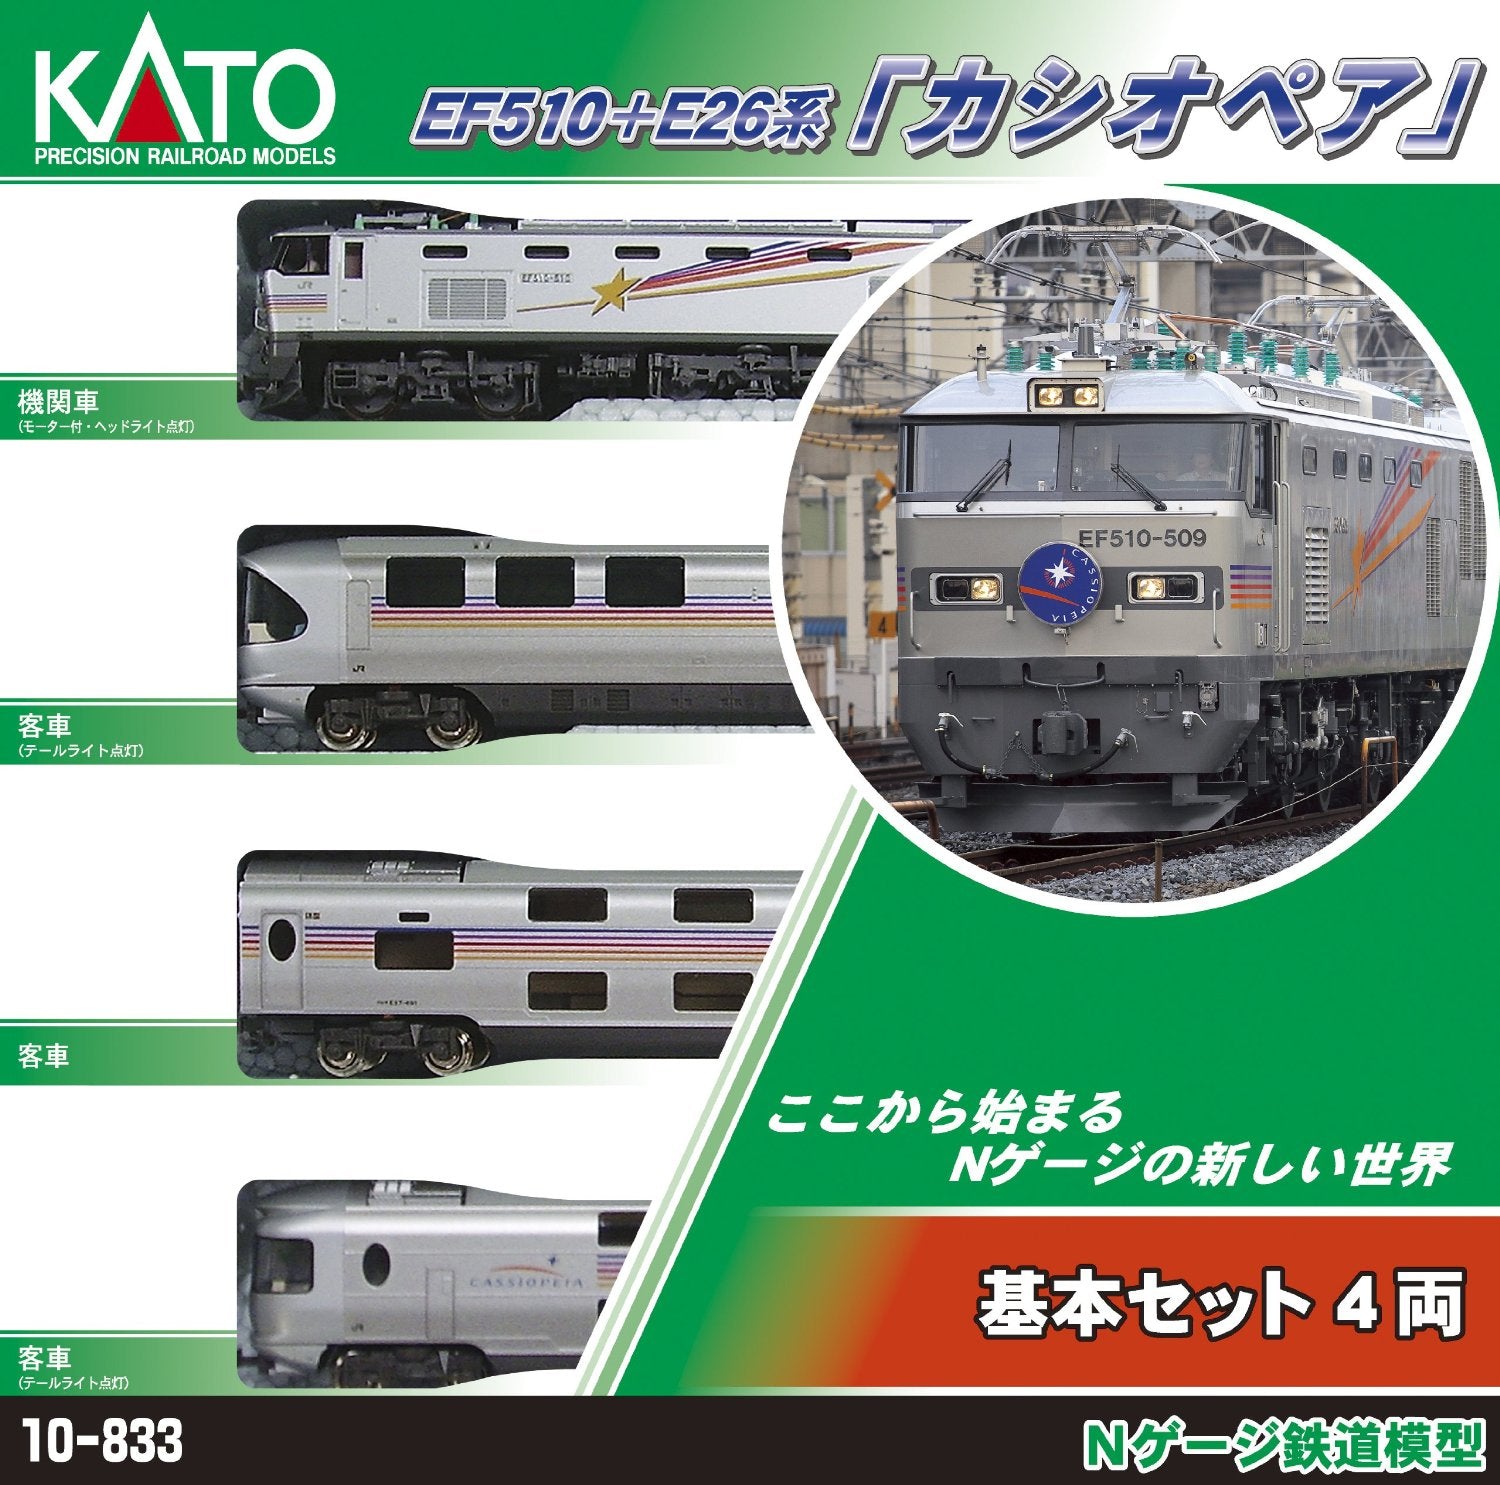 10-833 EF510 & E26 Sleeper Cassiopeia Express Train 4 Car Set